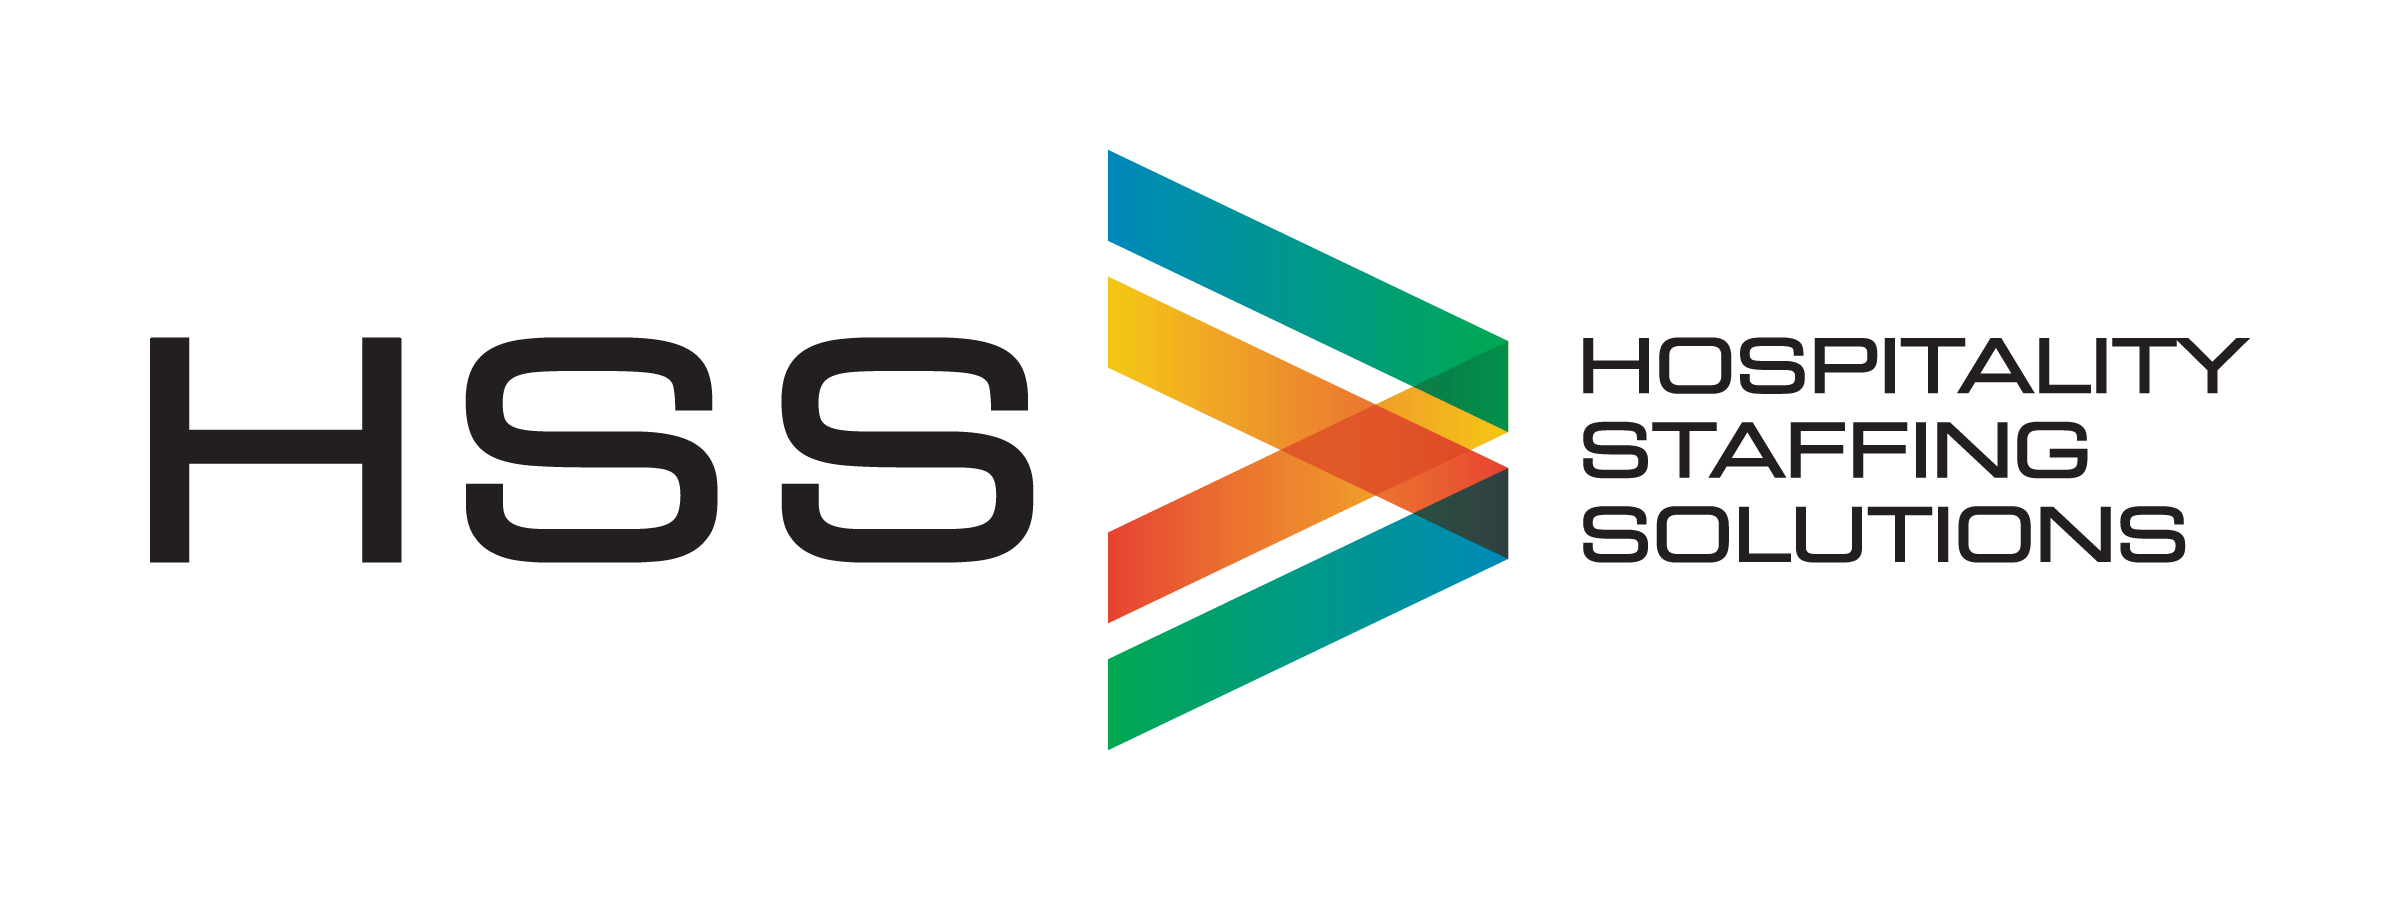 HSS Logo - HSS 2018 Primary Logo Lockup - Hospitality Staffing Solutions